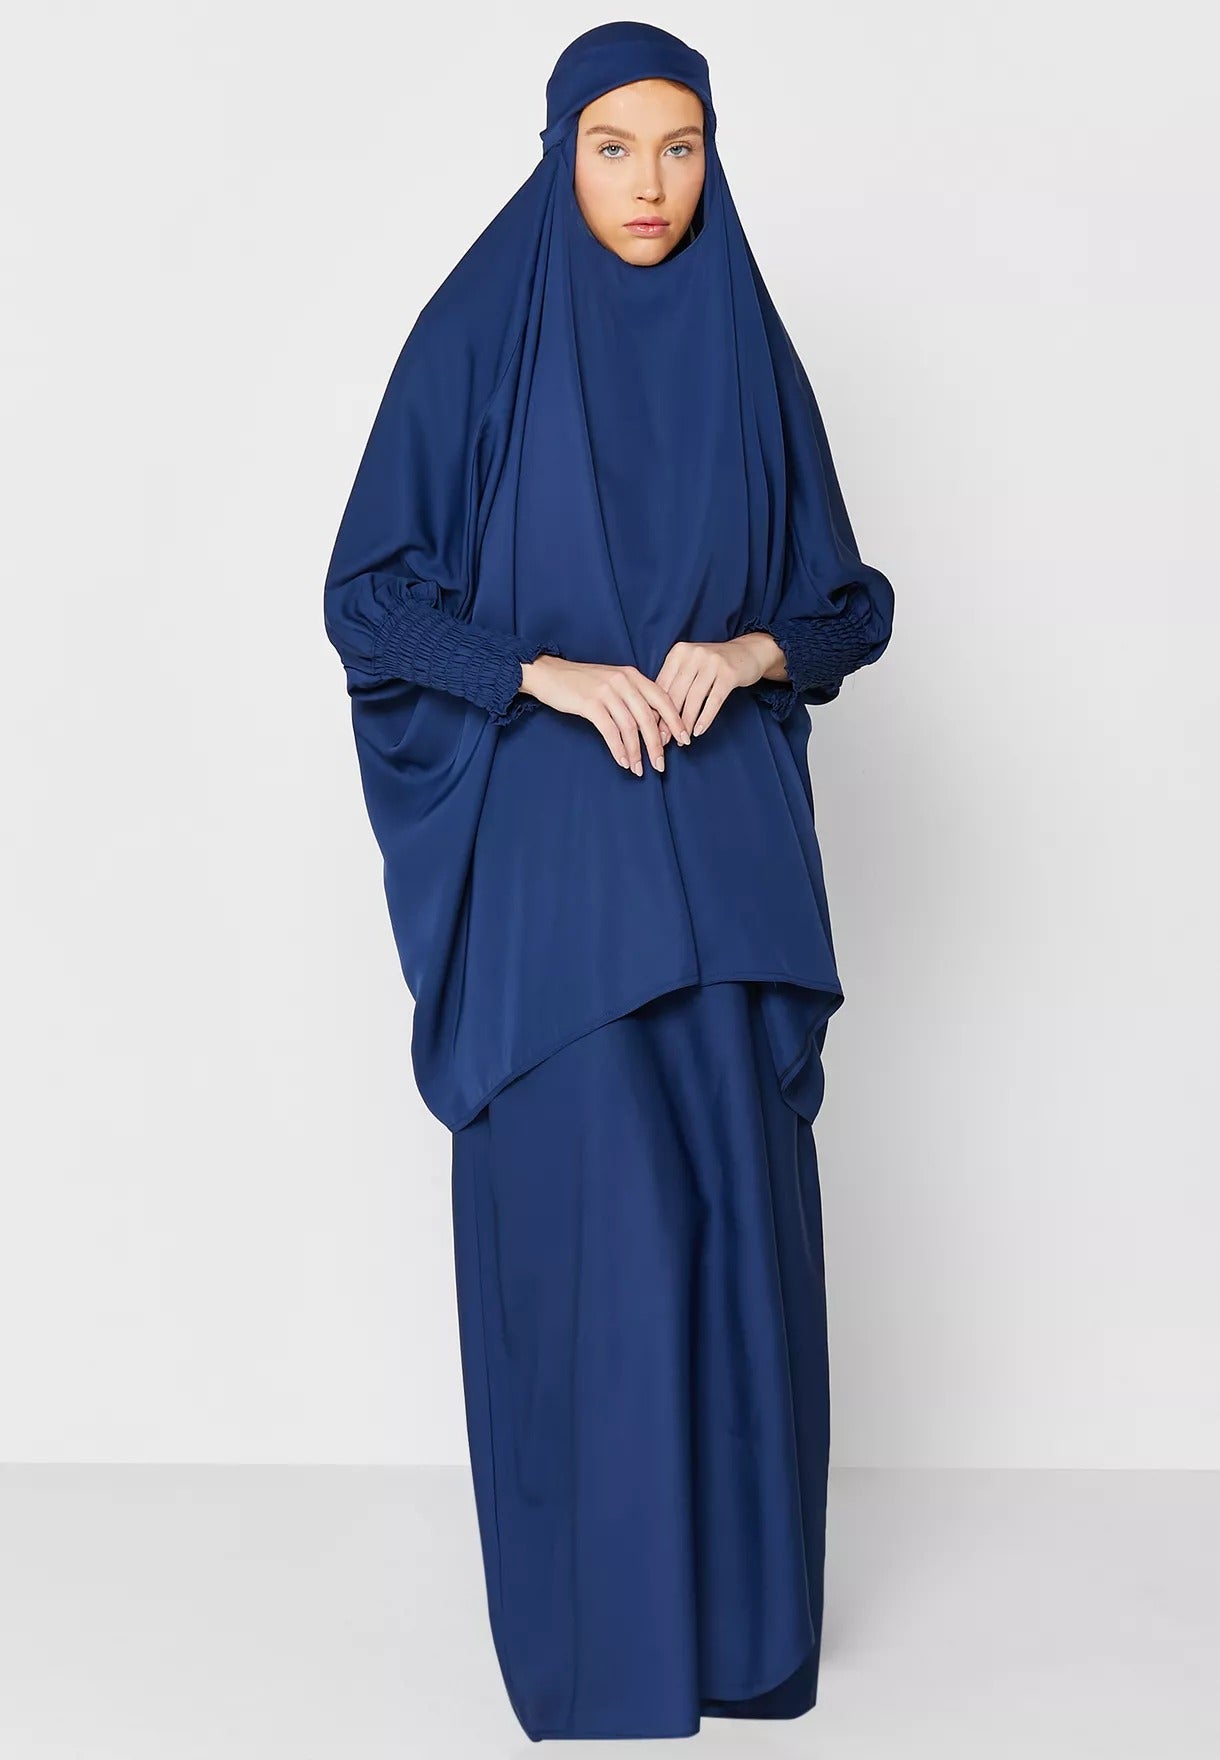 Premium full coverage islamic clothing-N25P-N25P